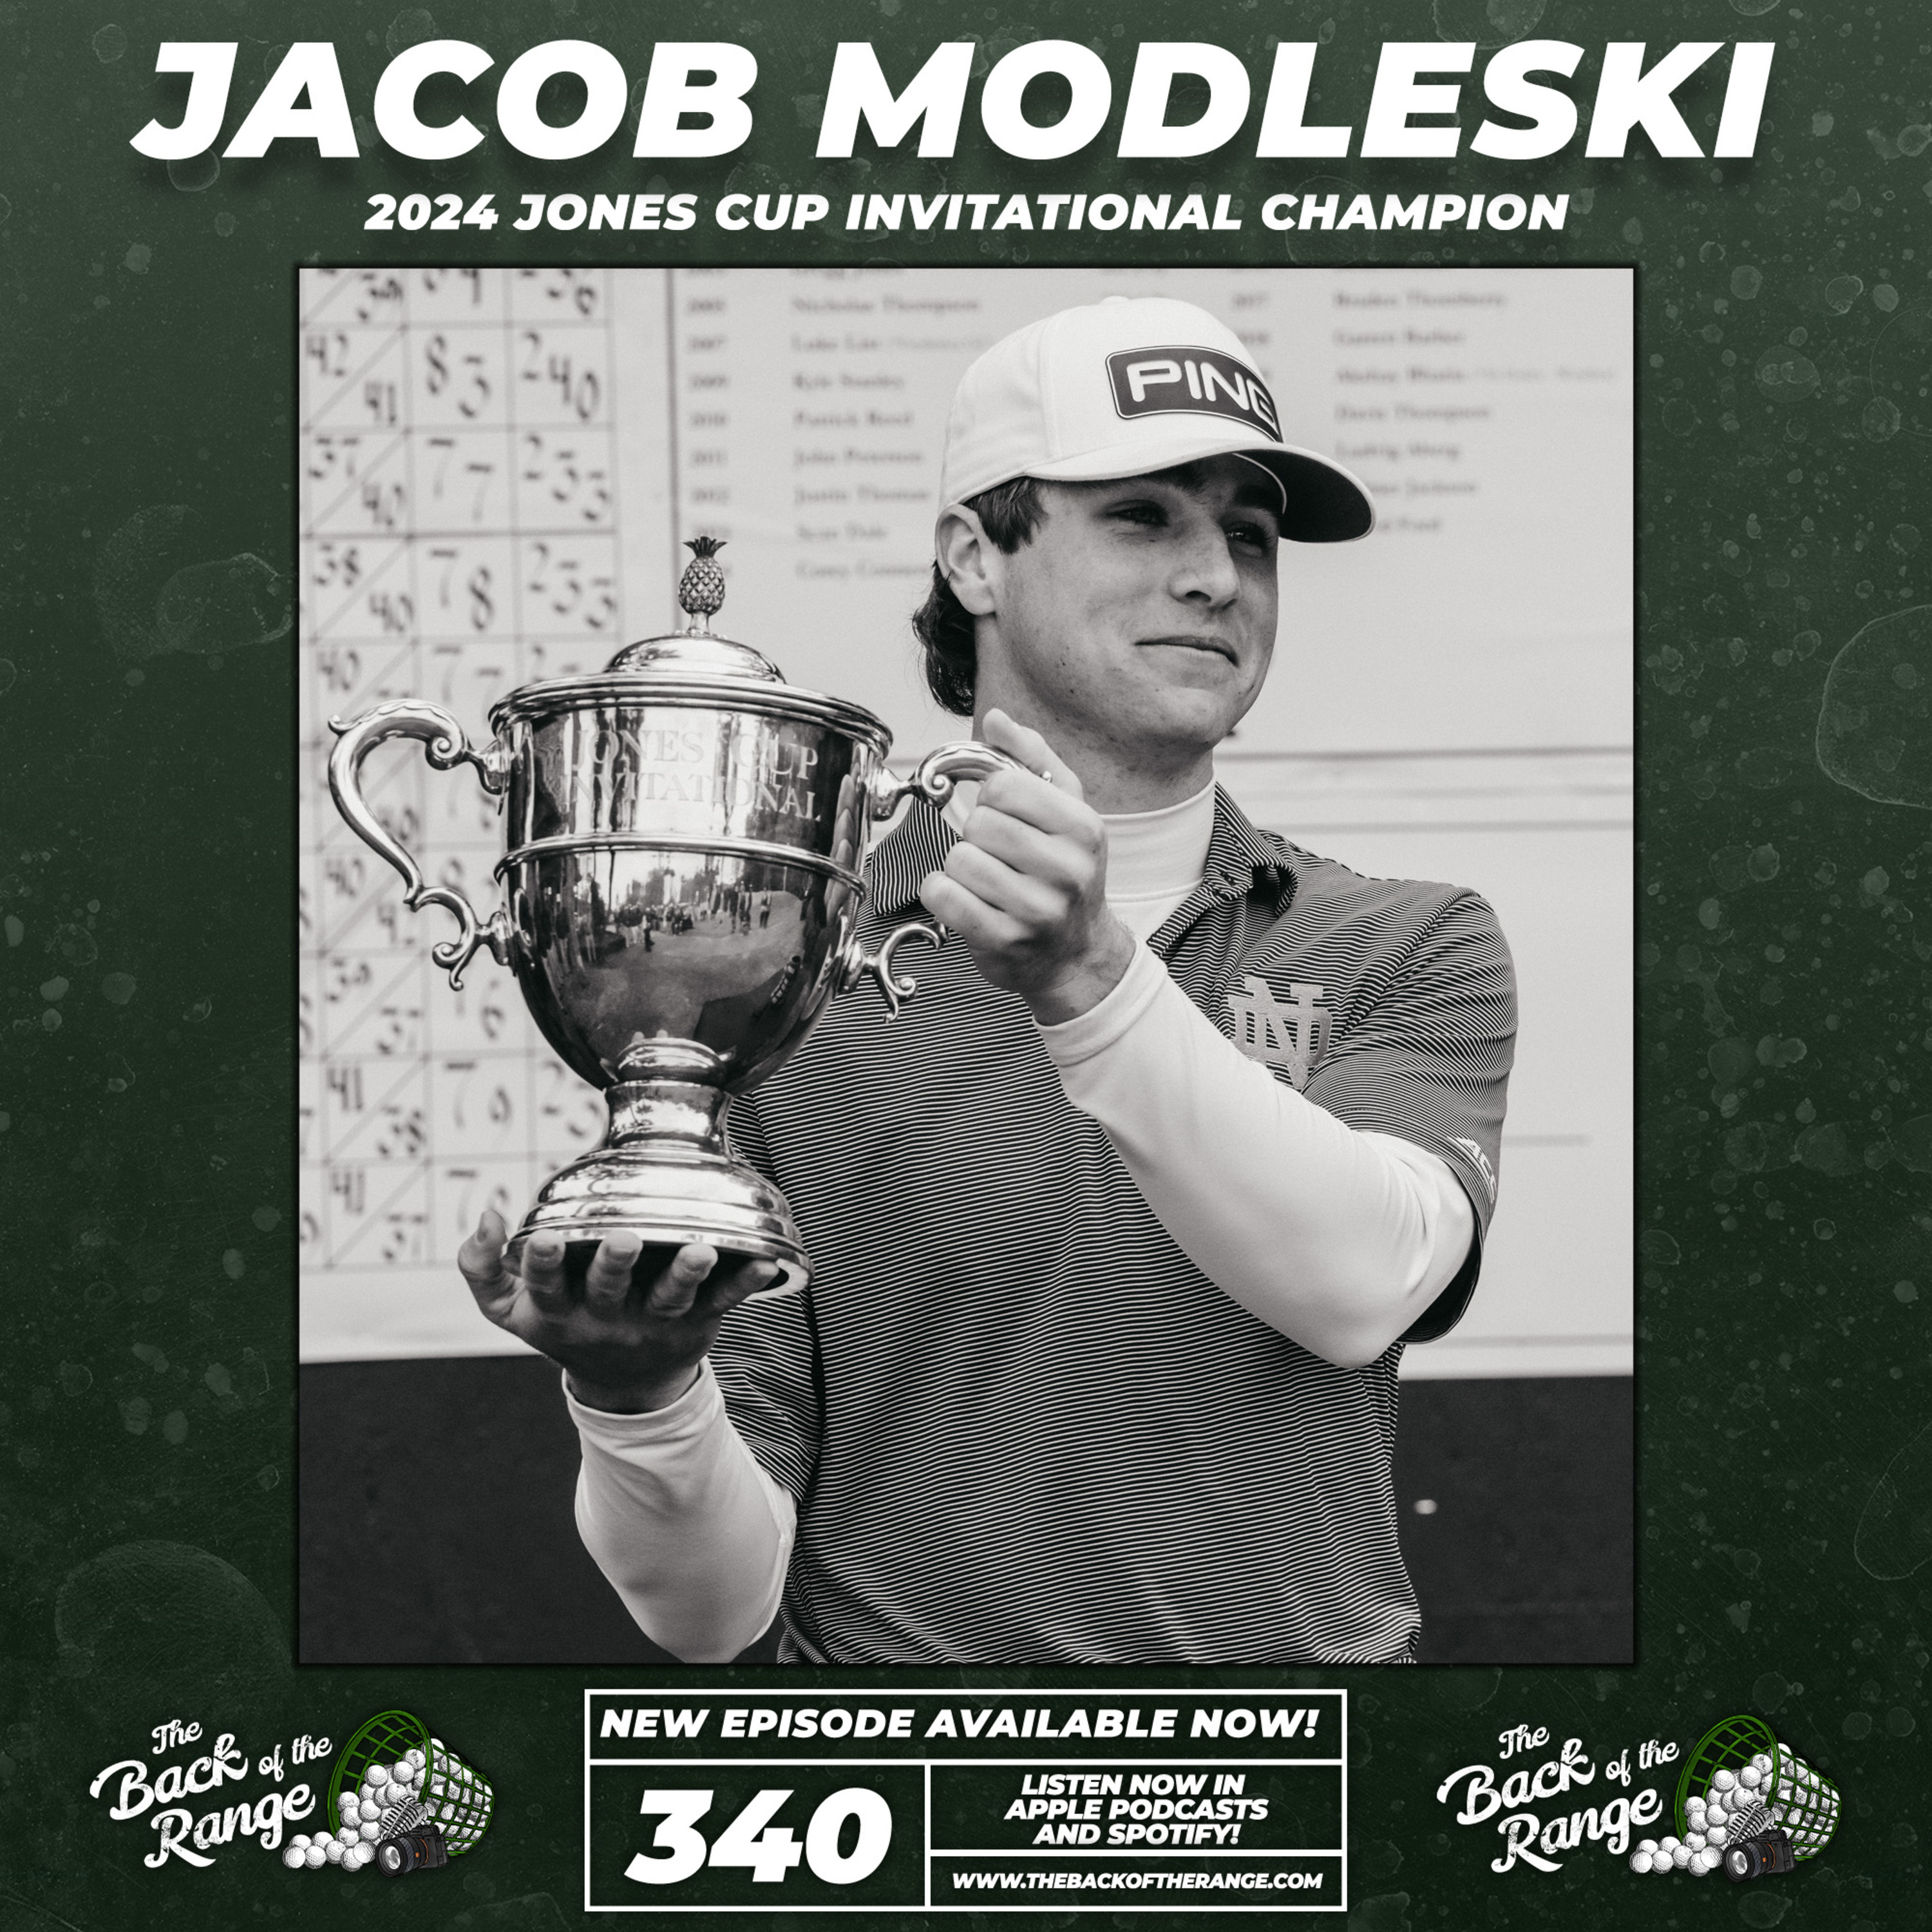 Jacob Modleski - 2024 Jones Cup Invitational Champion